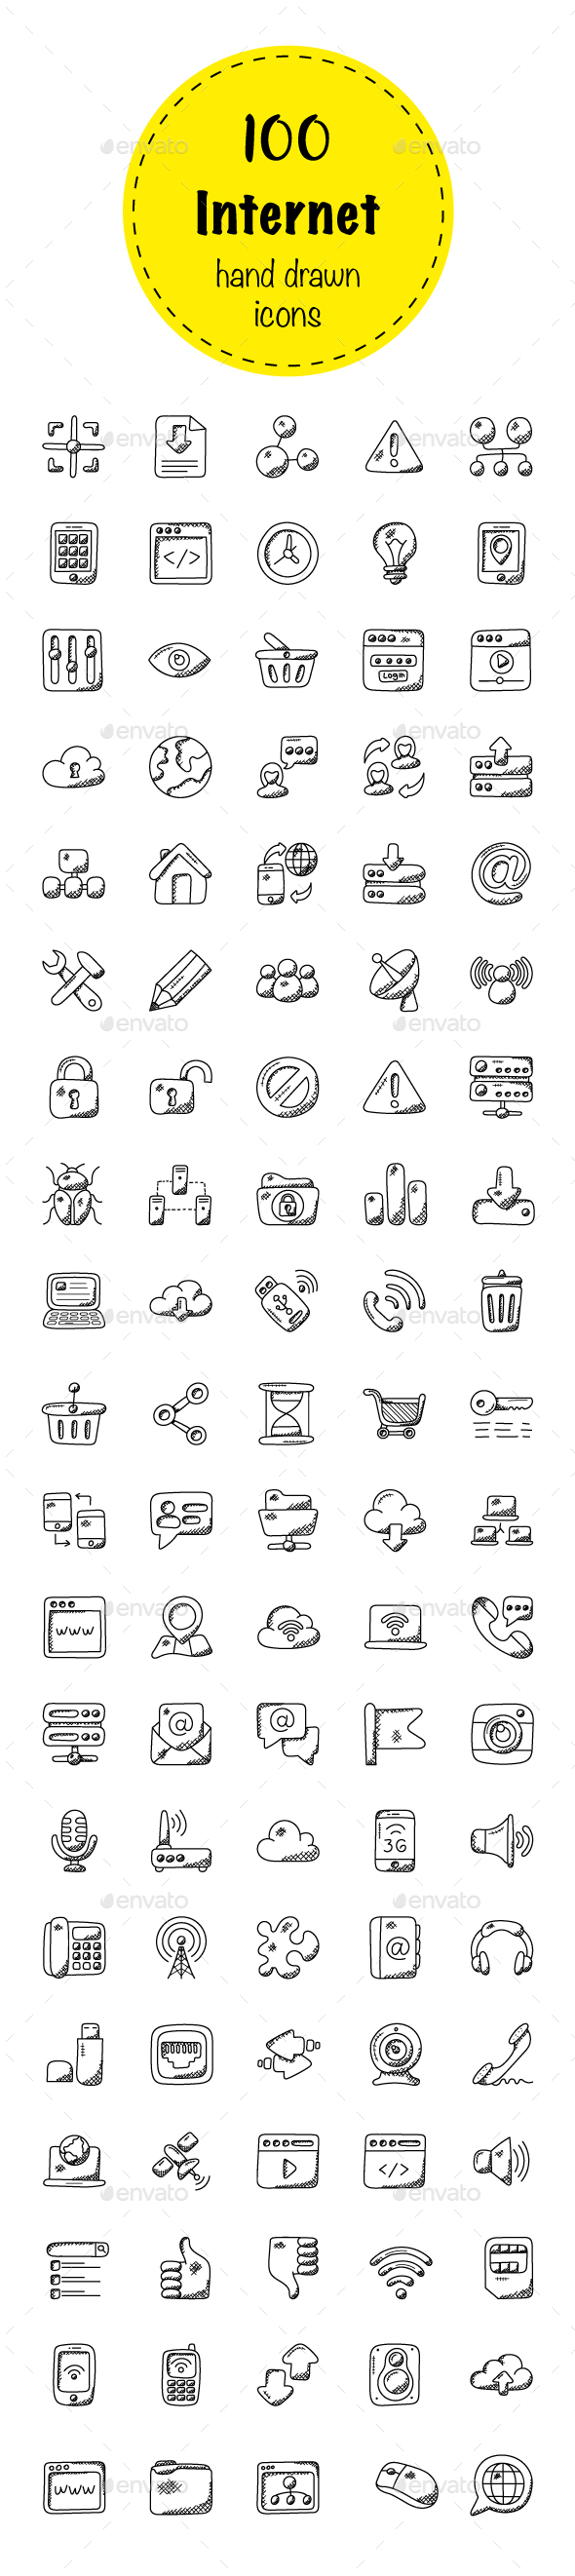 100 Internet Doodle Icons